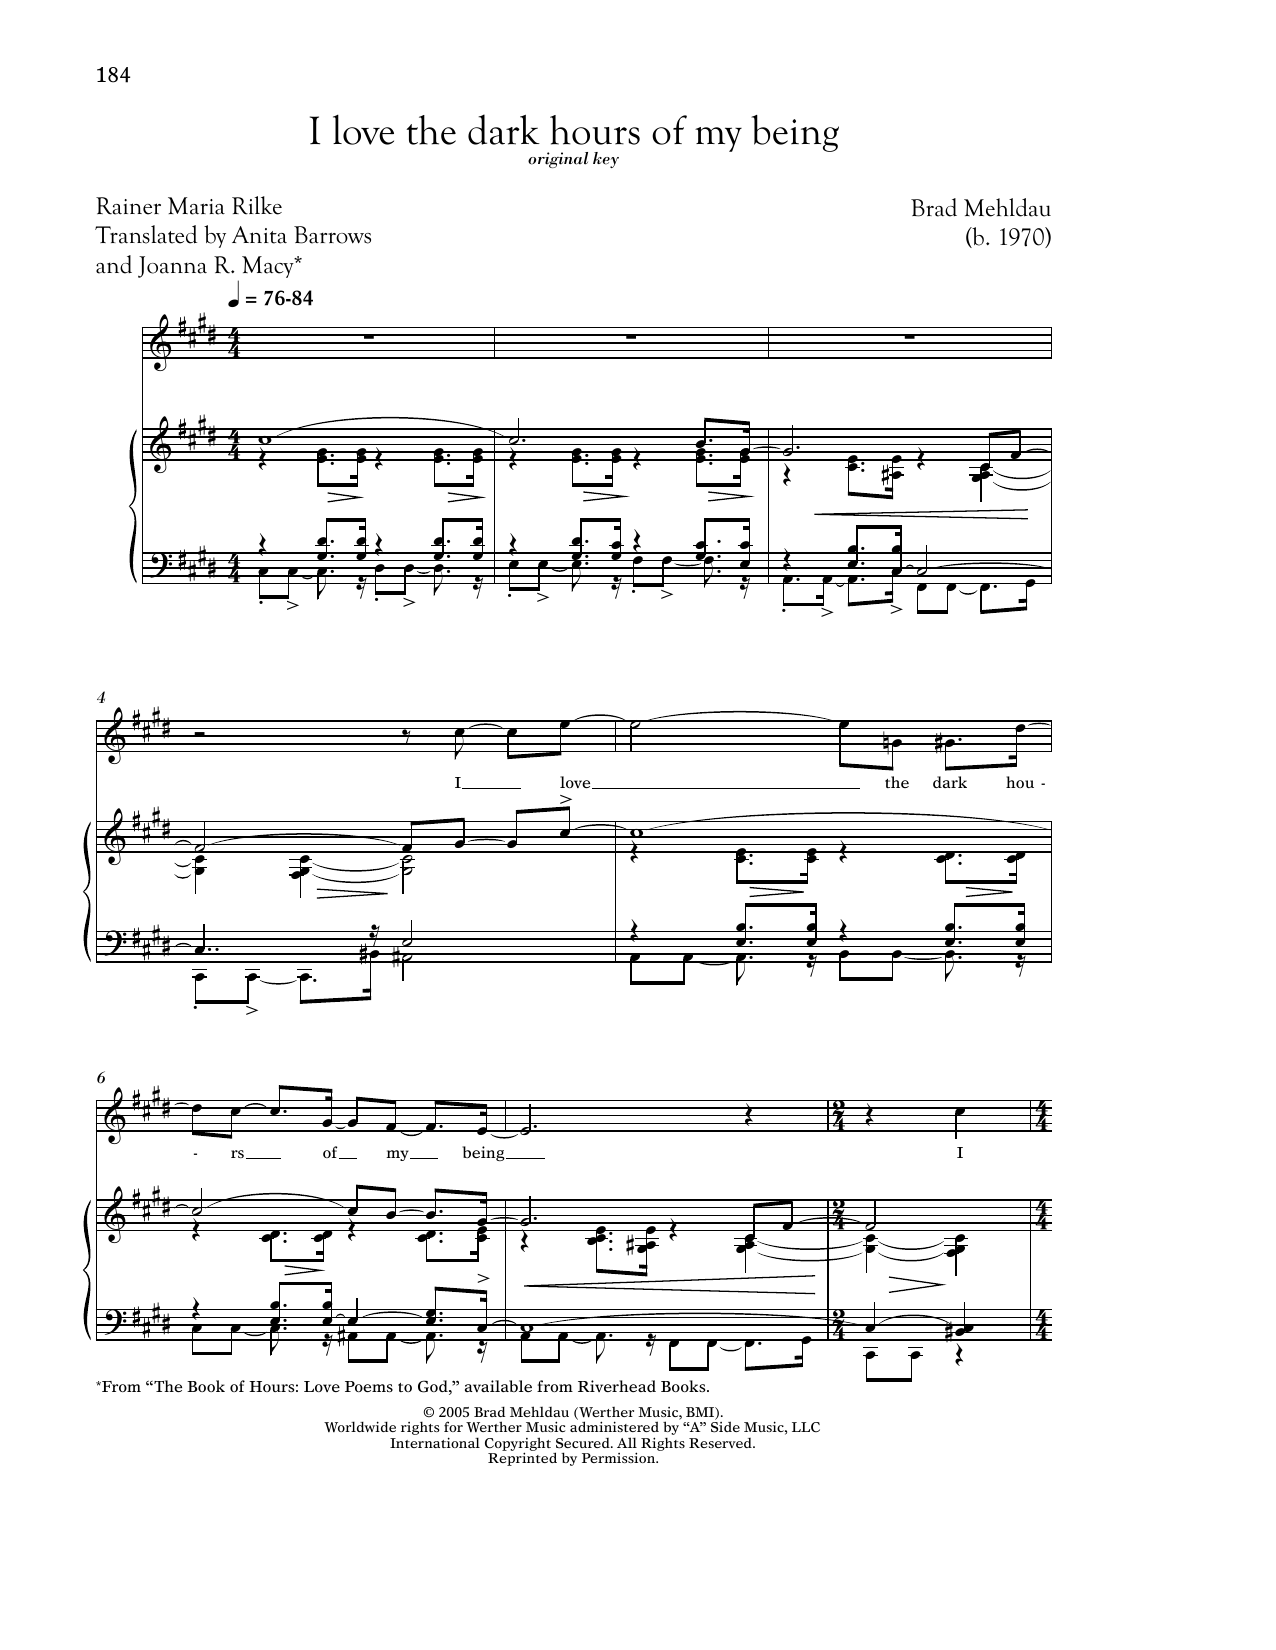 Desviación Escandaloso Bombero Rainer Maria Rilke "I Love The Dark Hours Of My Being" Sheet Music PDF  Notes, Chords | Classical Score Piano & Vocal Download Printable. SKU:  196188